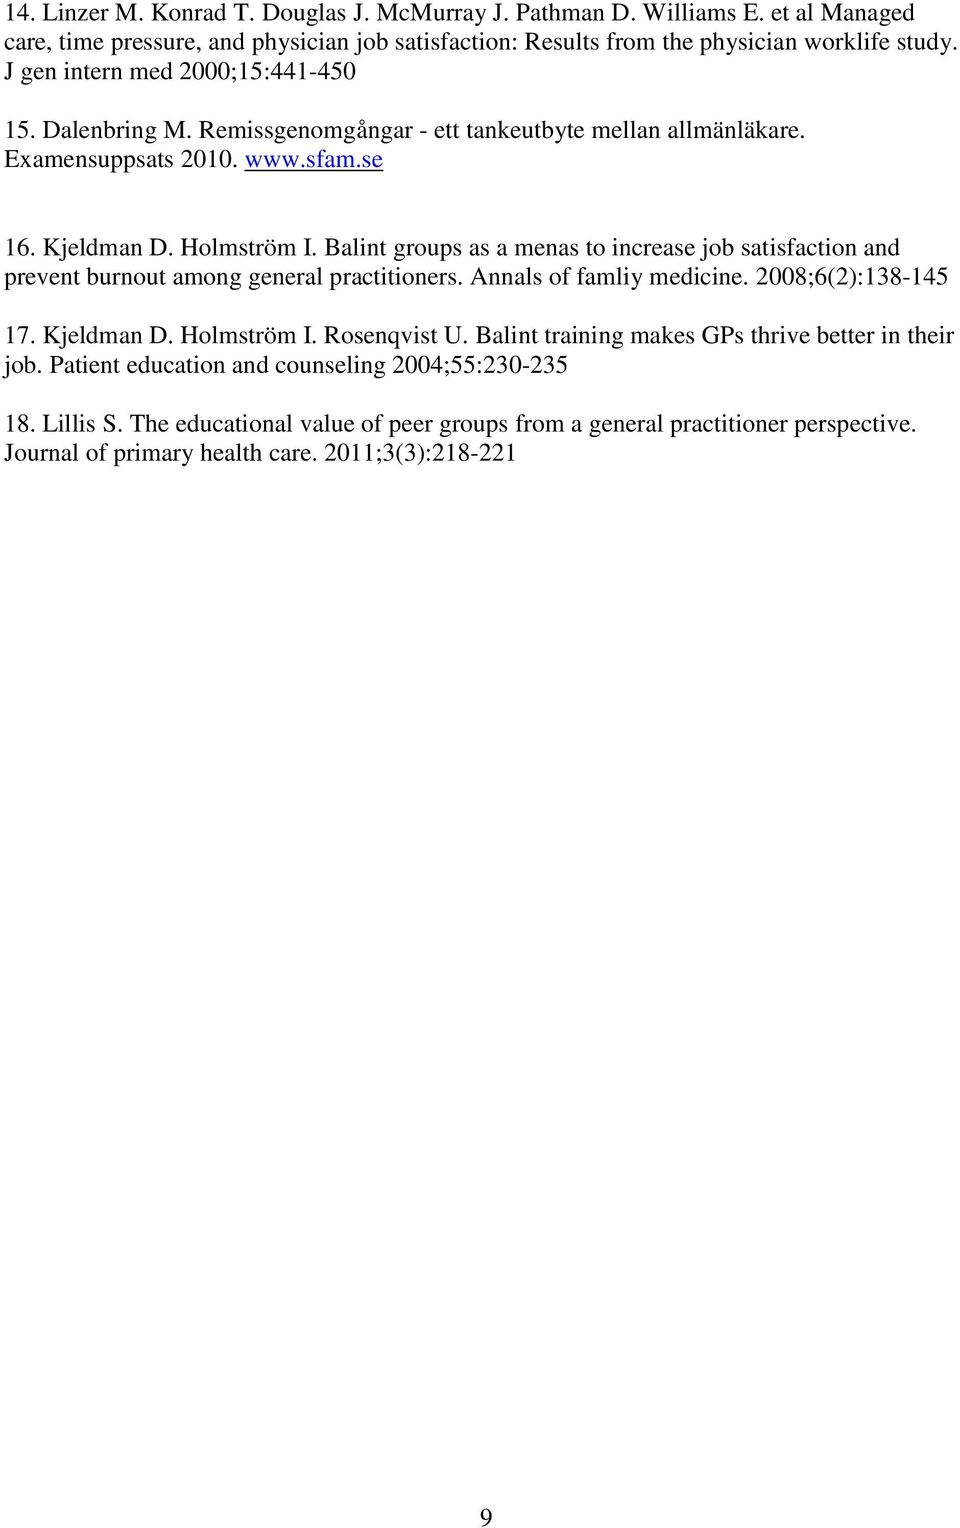 Balint groups as a menas to increase job satisfaction and prevent burnout among general practitioners. Annals of famliy medicine. 2008;6(2):138-145 17. Kjeldman D. Holmström I. Rosenqvist U.